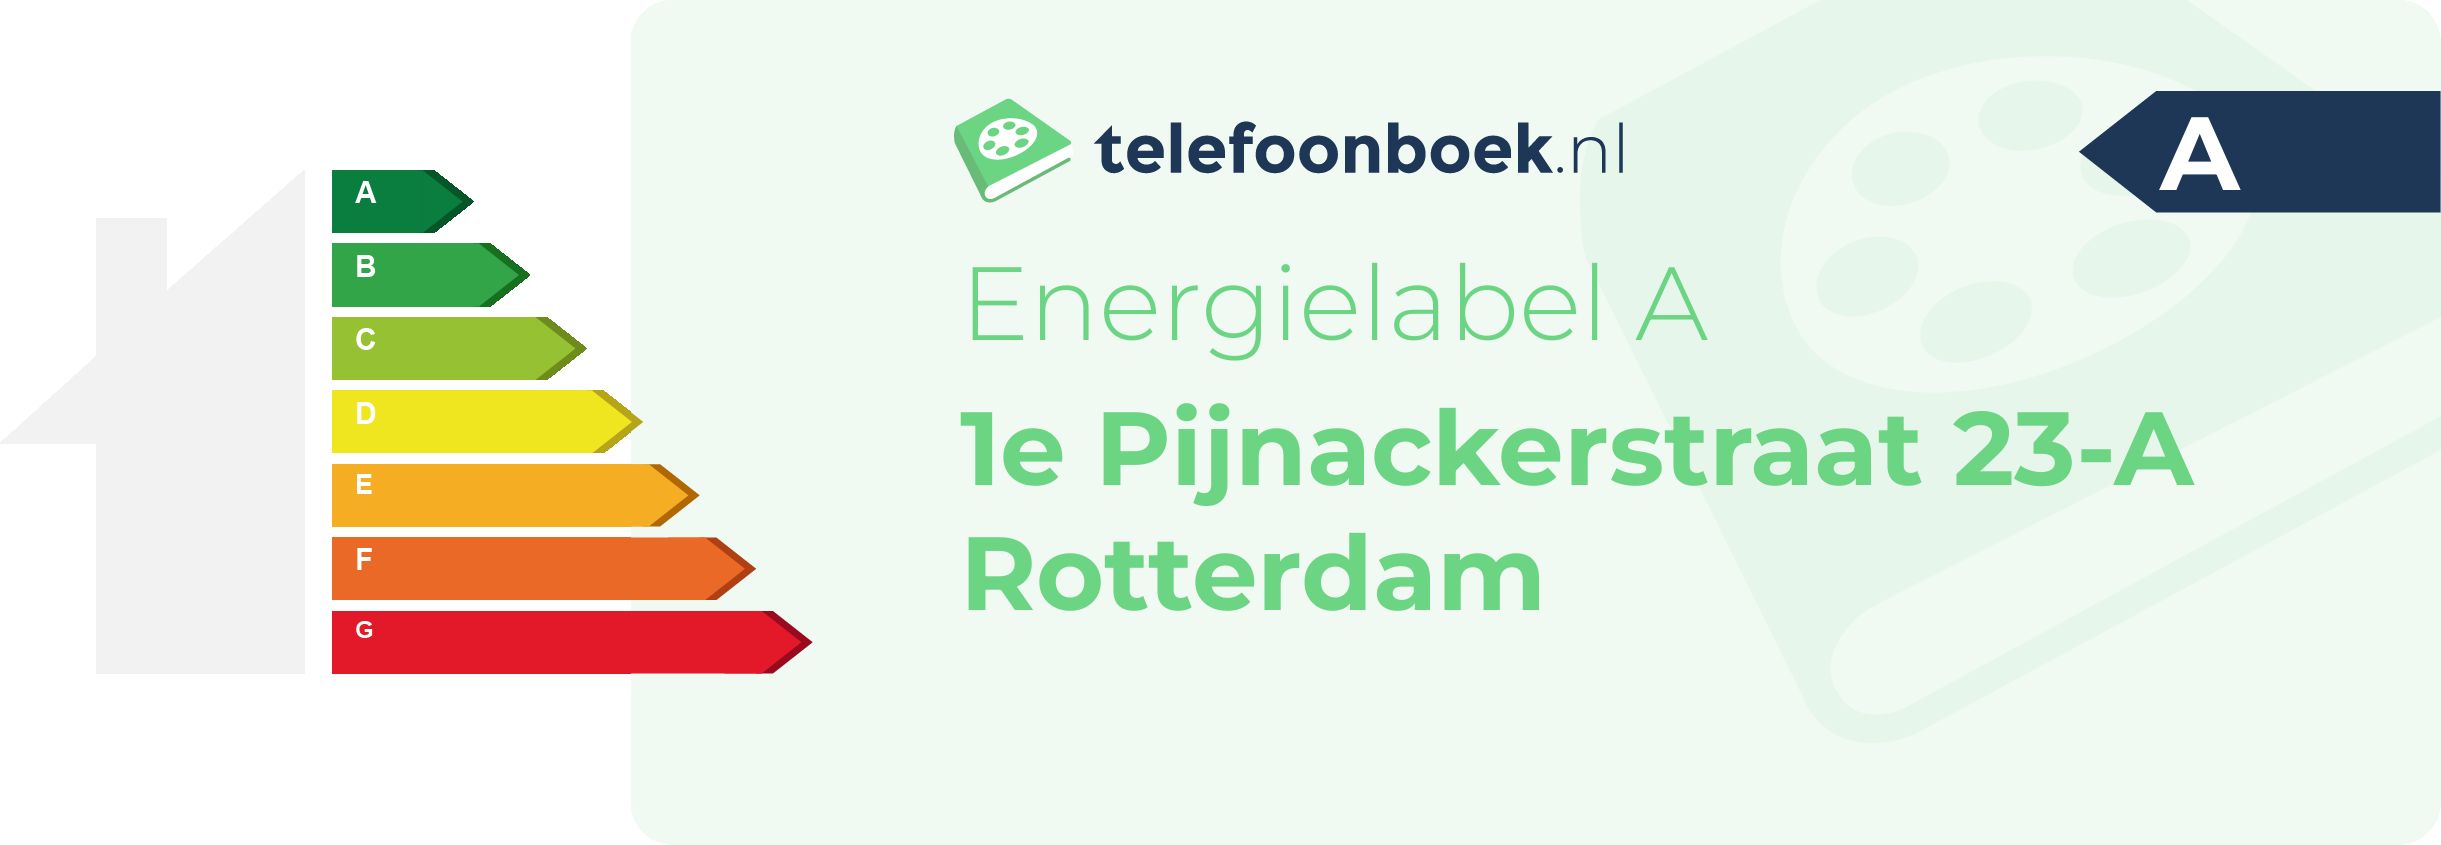 Energielabel 1e Pijnackerstraat 23-A Rotterdam